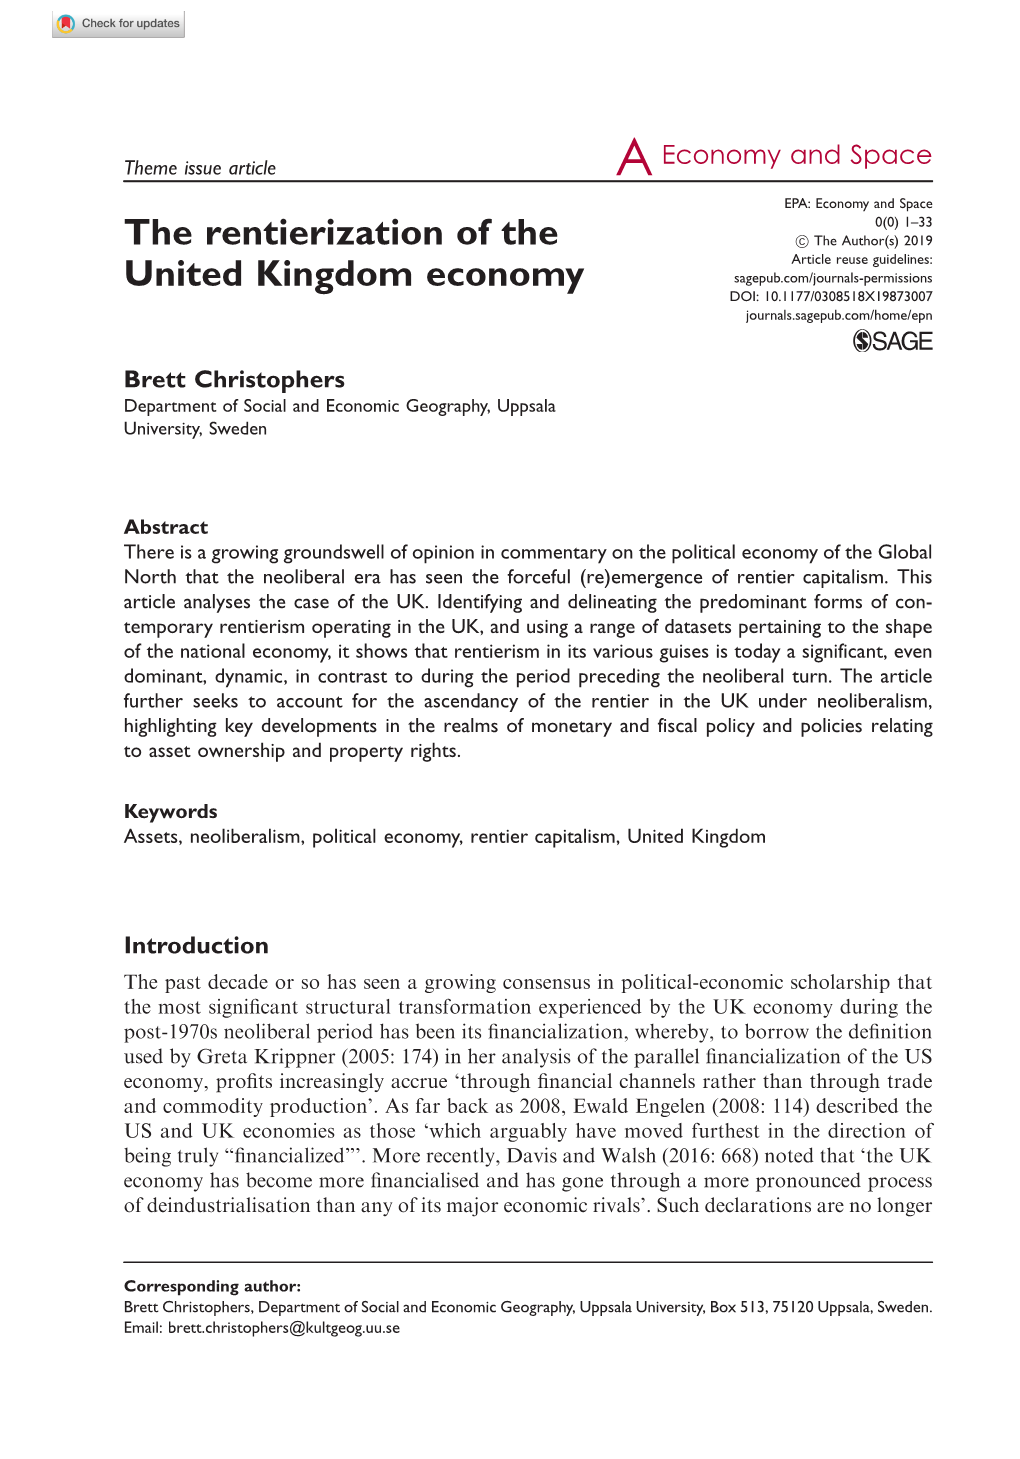 The Rentierization of the United Kingdom Economy